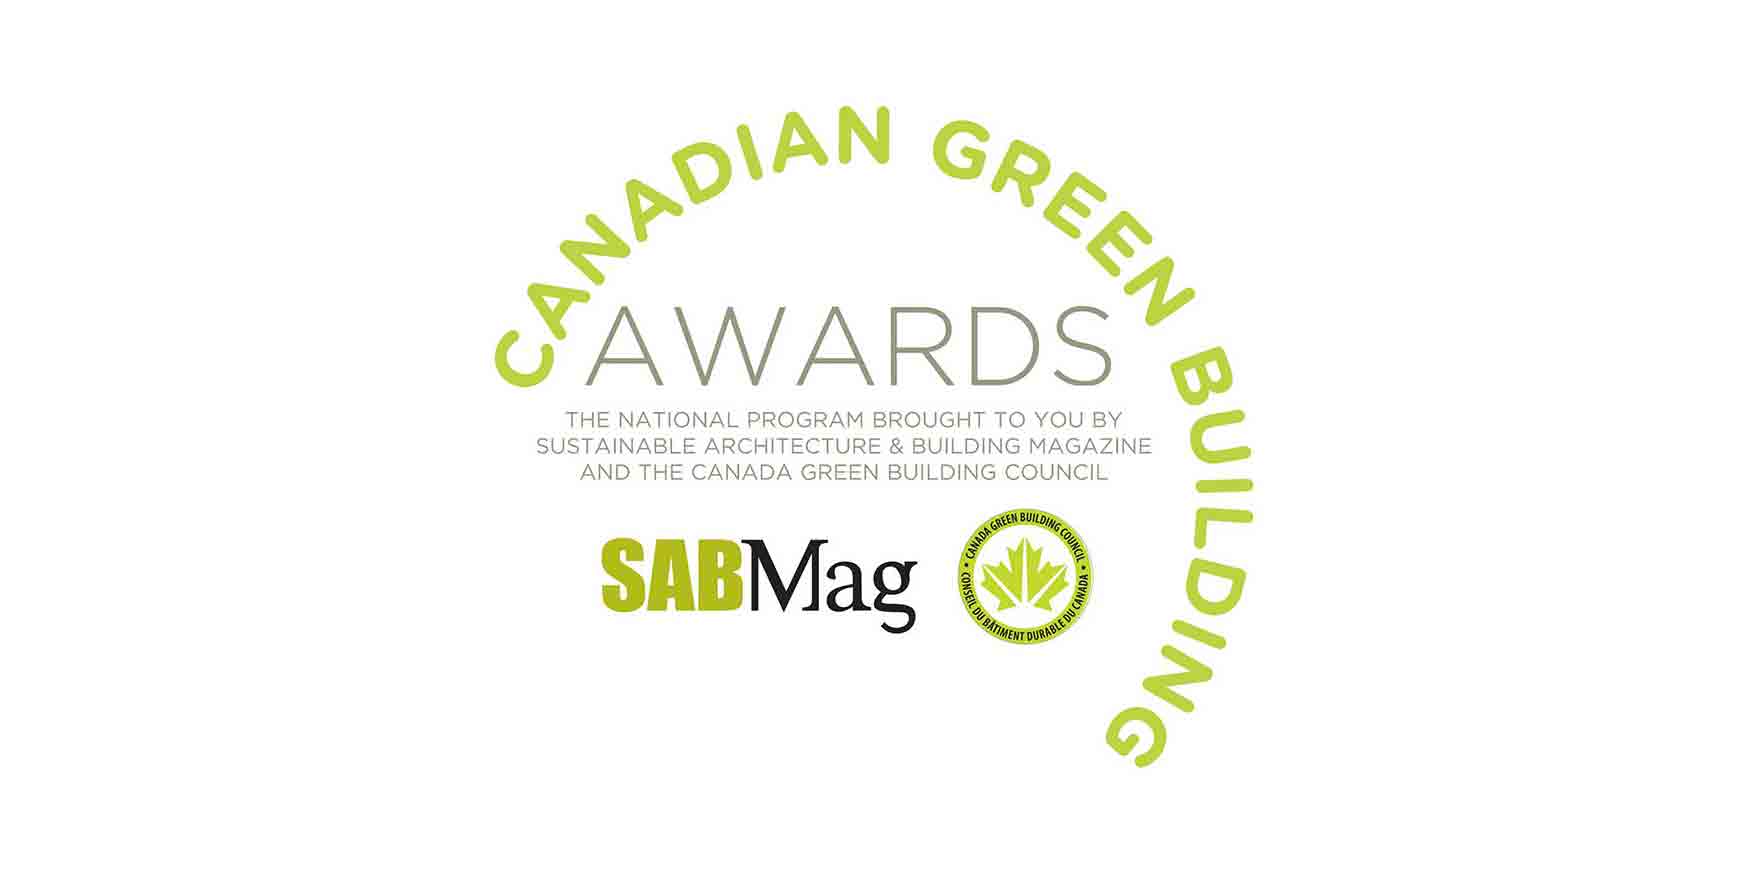 FABRIQ membre du jury des Canadian Green Building Awards 2016 !